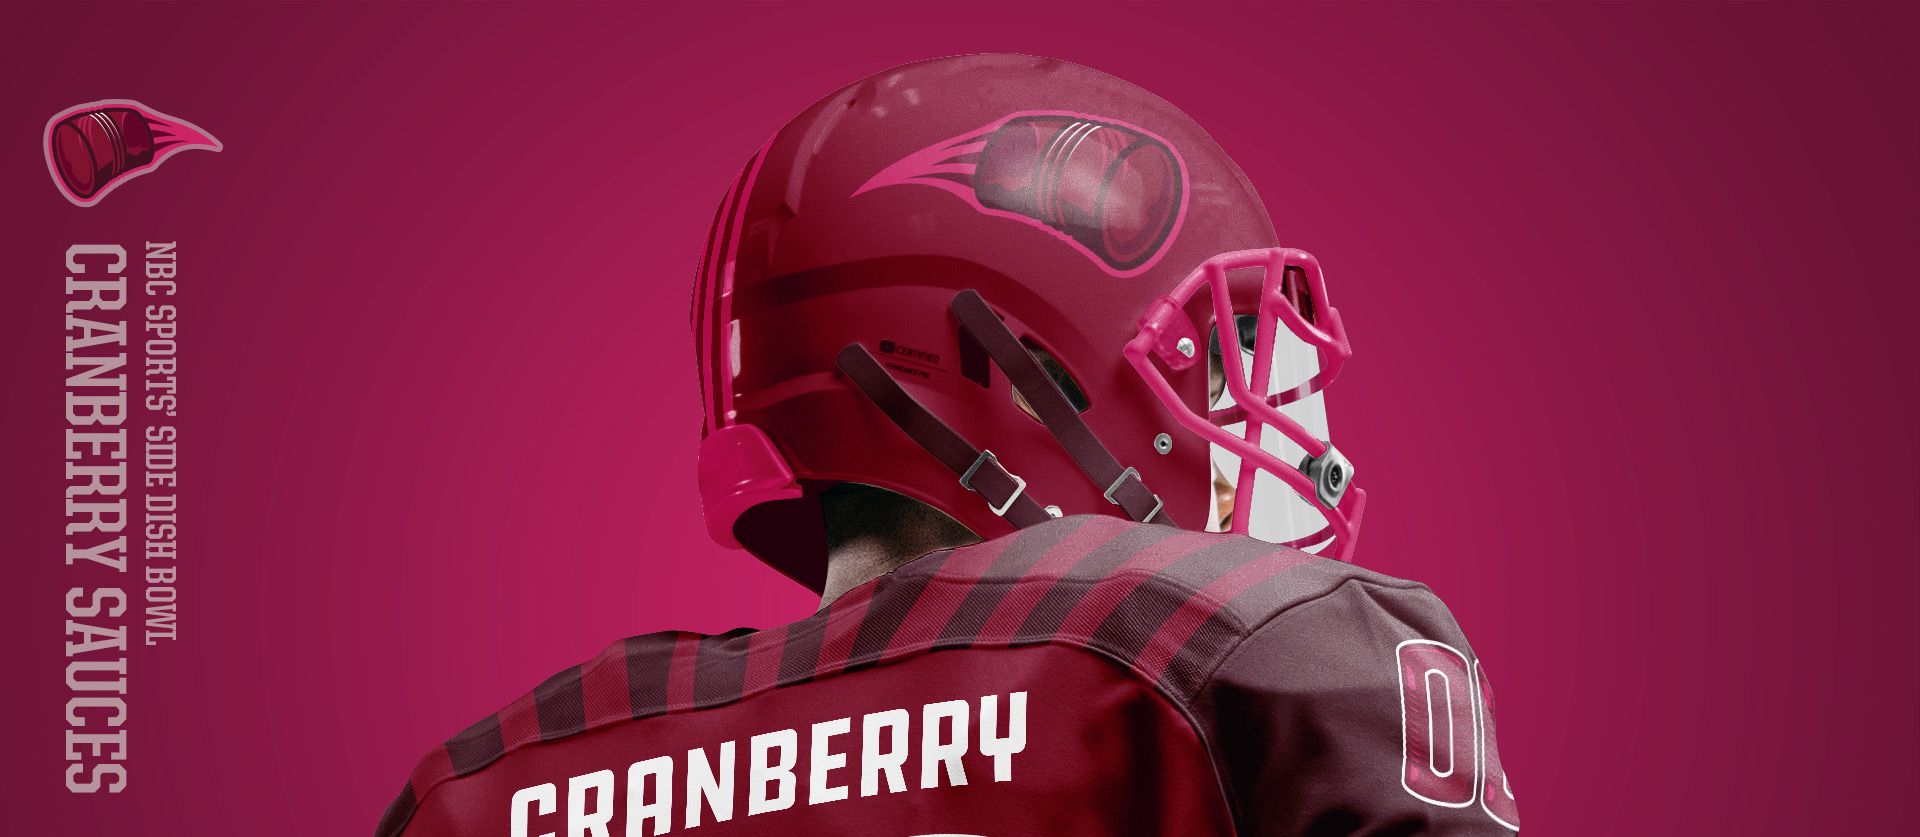 Cranberry Sauces Helmet Backside - Football Uniform Design for NBC Sports Thanksgiving Side Dish Bowl